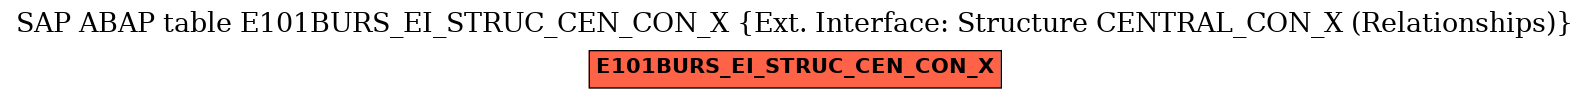 E-R Diagram for table E101BURS_EI_STRUC_CEN_CON_X (Ext. Interface: Structure CENTRAL_CON_X (Relationships))